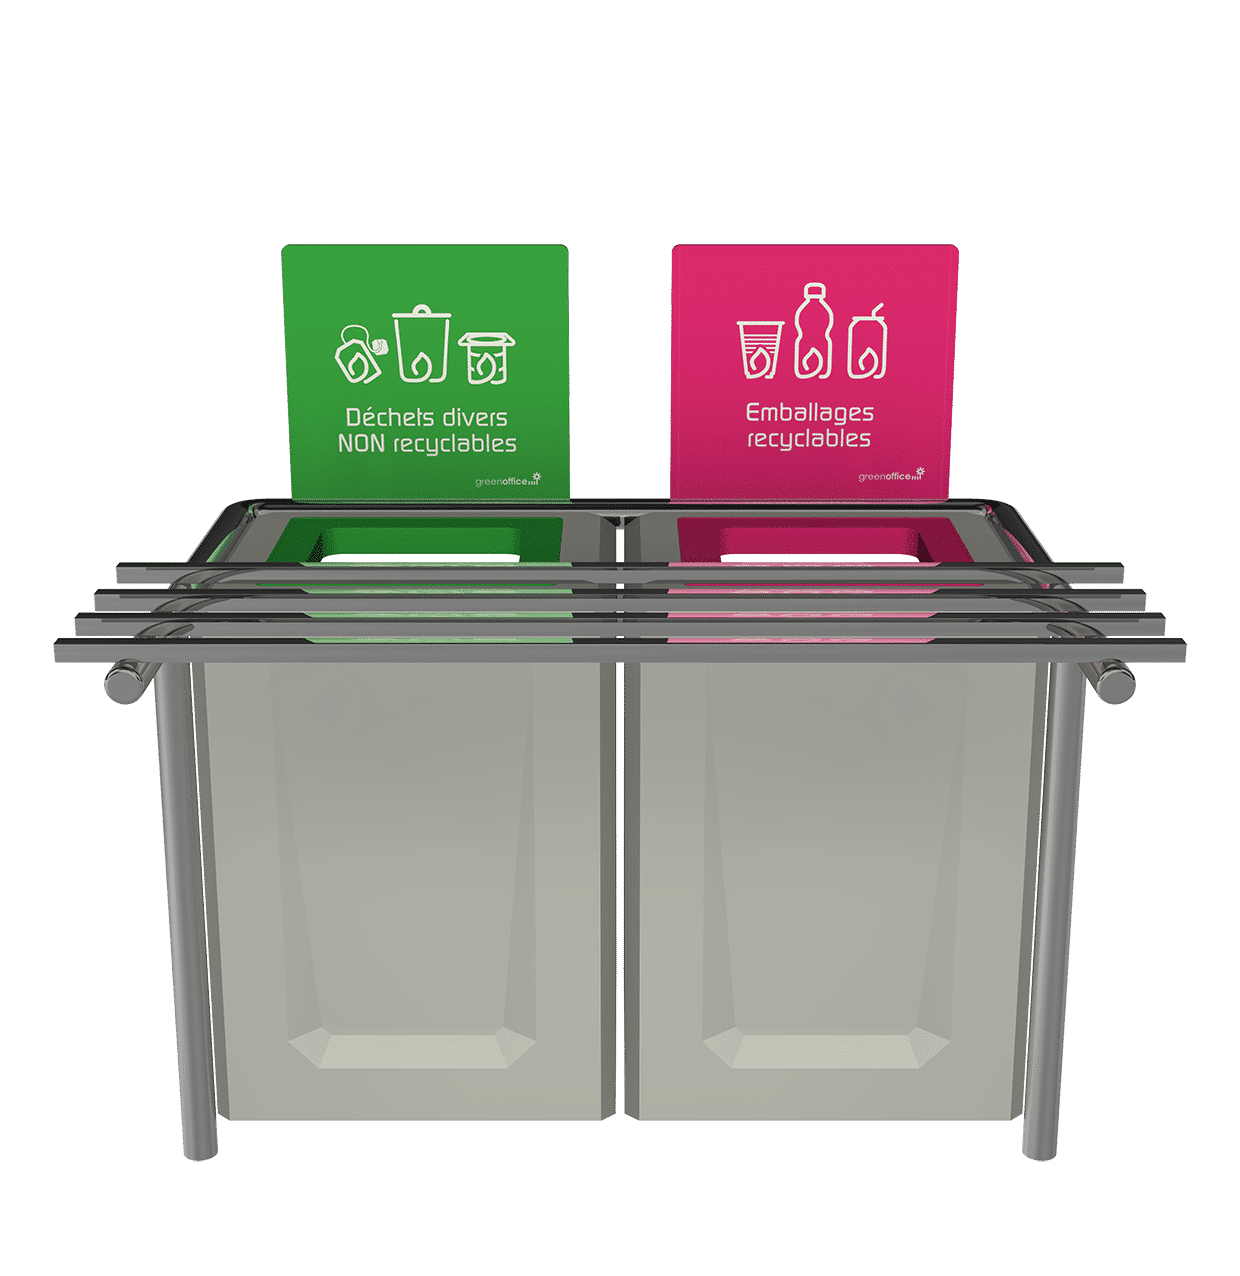 greenoffice-recycling-bin-trigo-60-2-preview-product